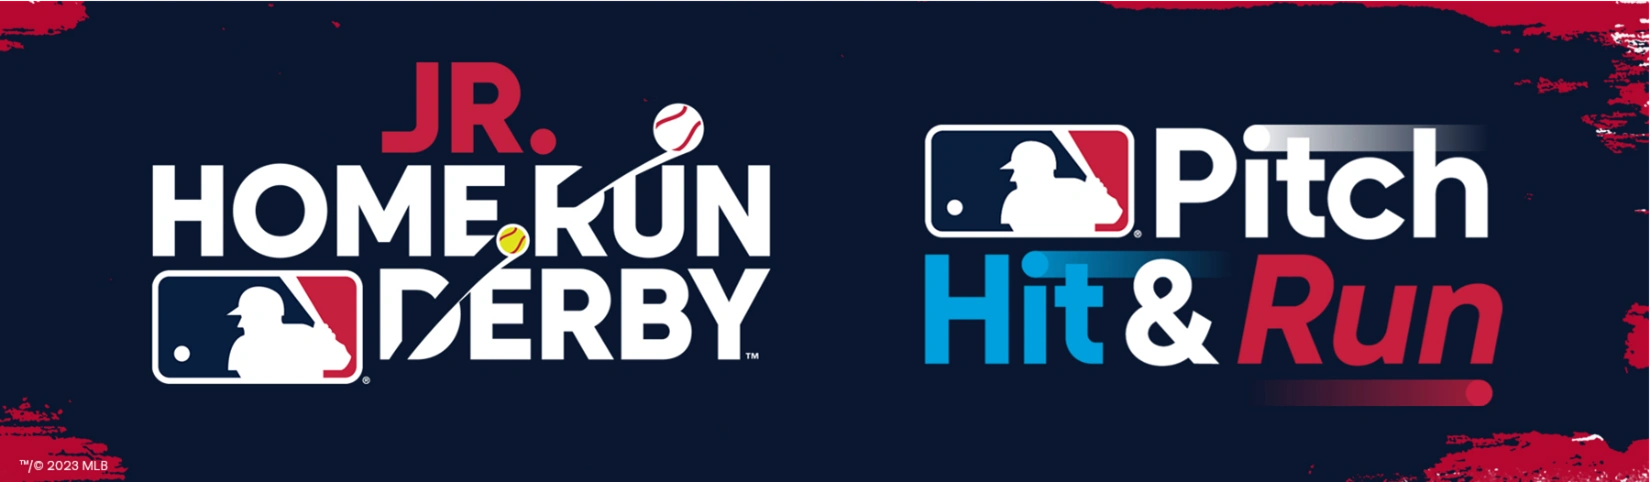 Major League Baseball Pitch, Hit & Run and Jr Home Run Derby Softball